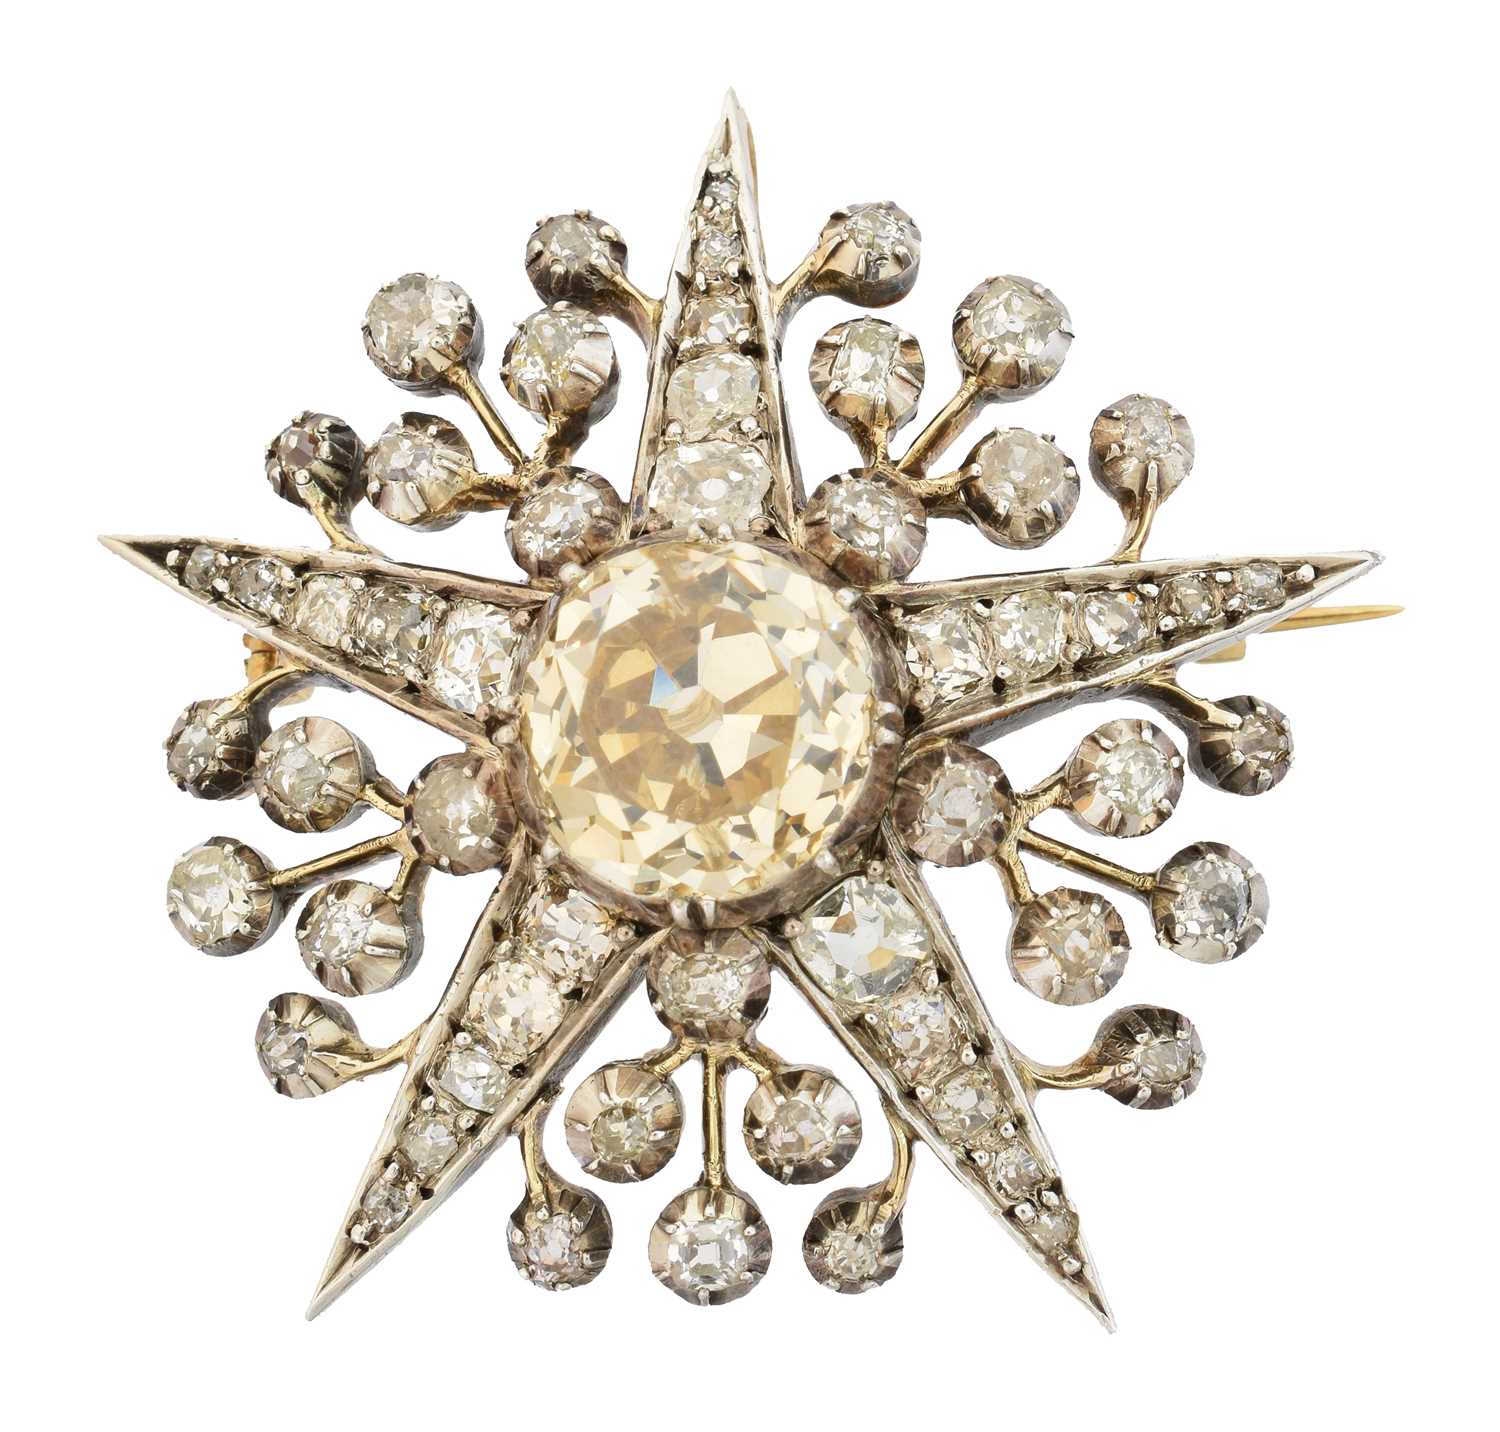 32 - A late 19th century diamond star brooch,